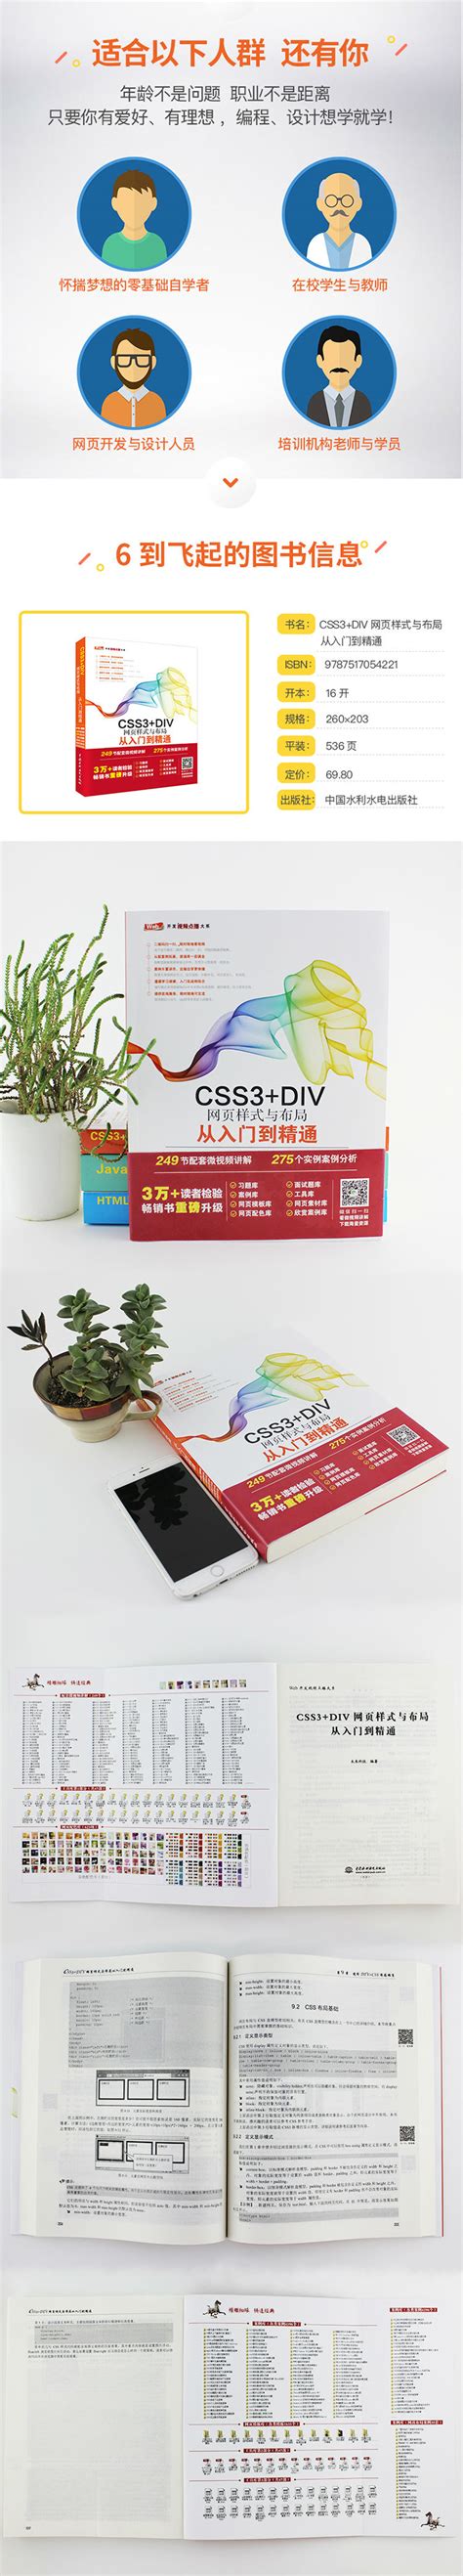 《CSS3+DIV网页样式与布局从入门到精通 web前端开发网页设计丛书》[41M]百度网盘pdf下载